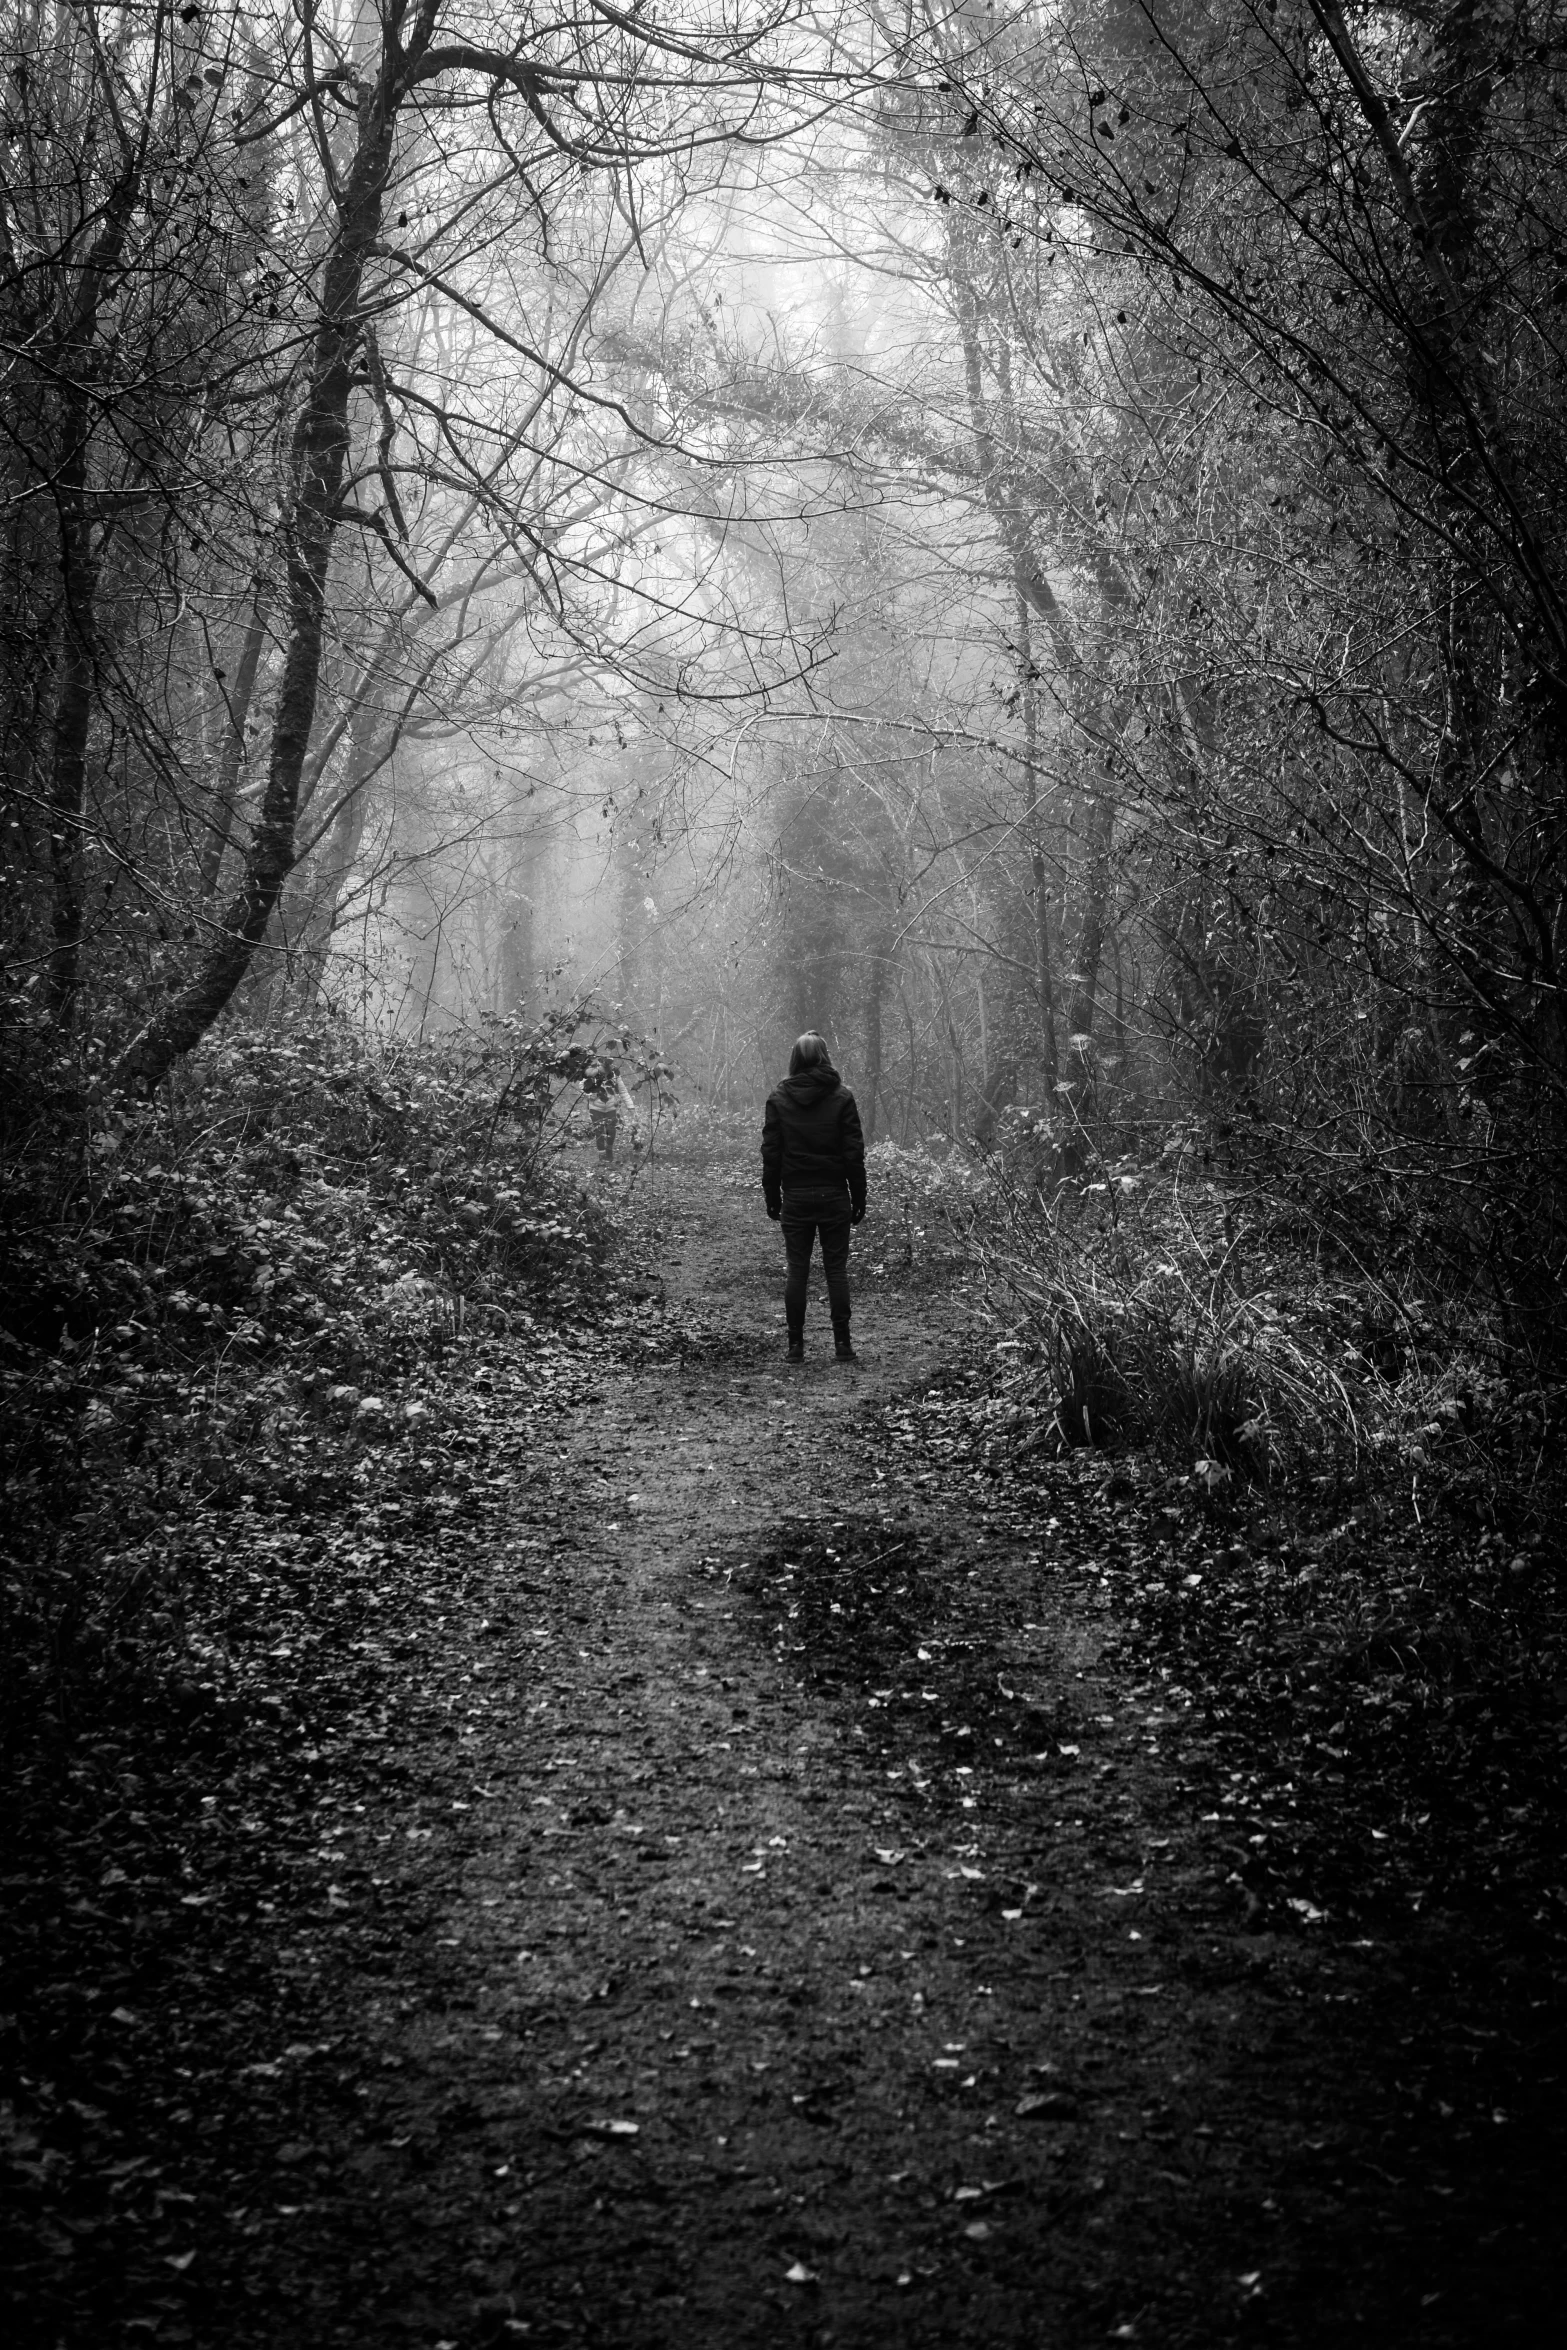 a man walking on a path through a forest